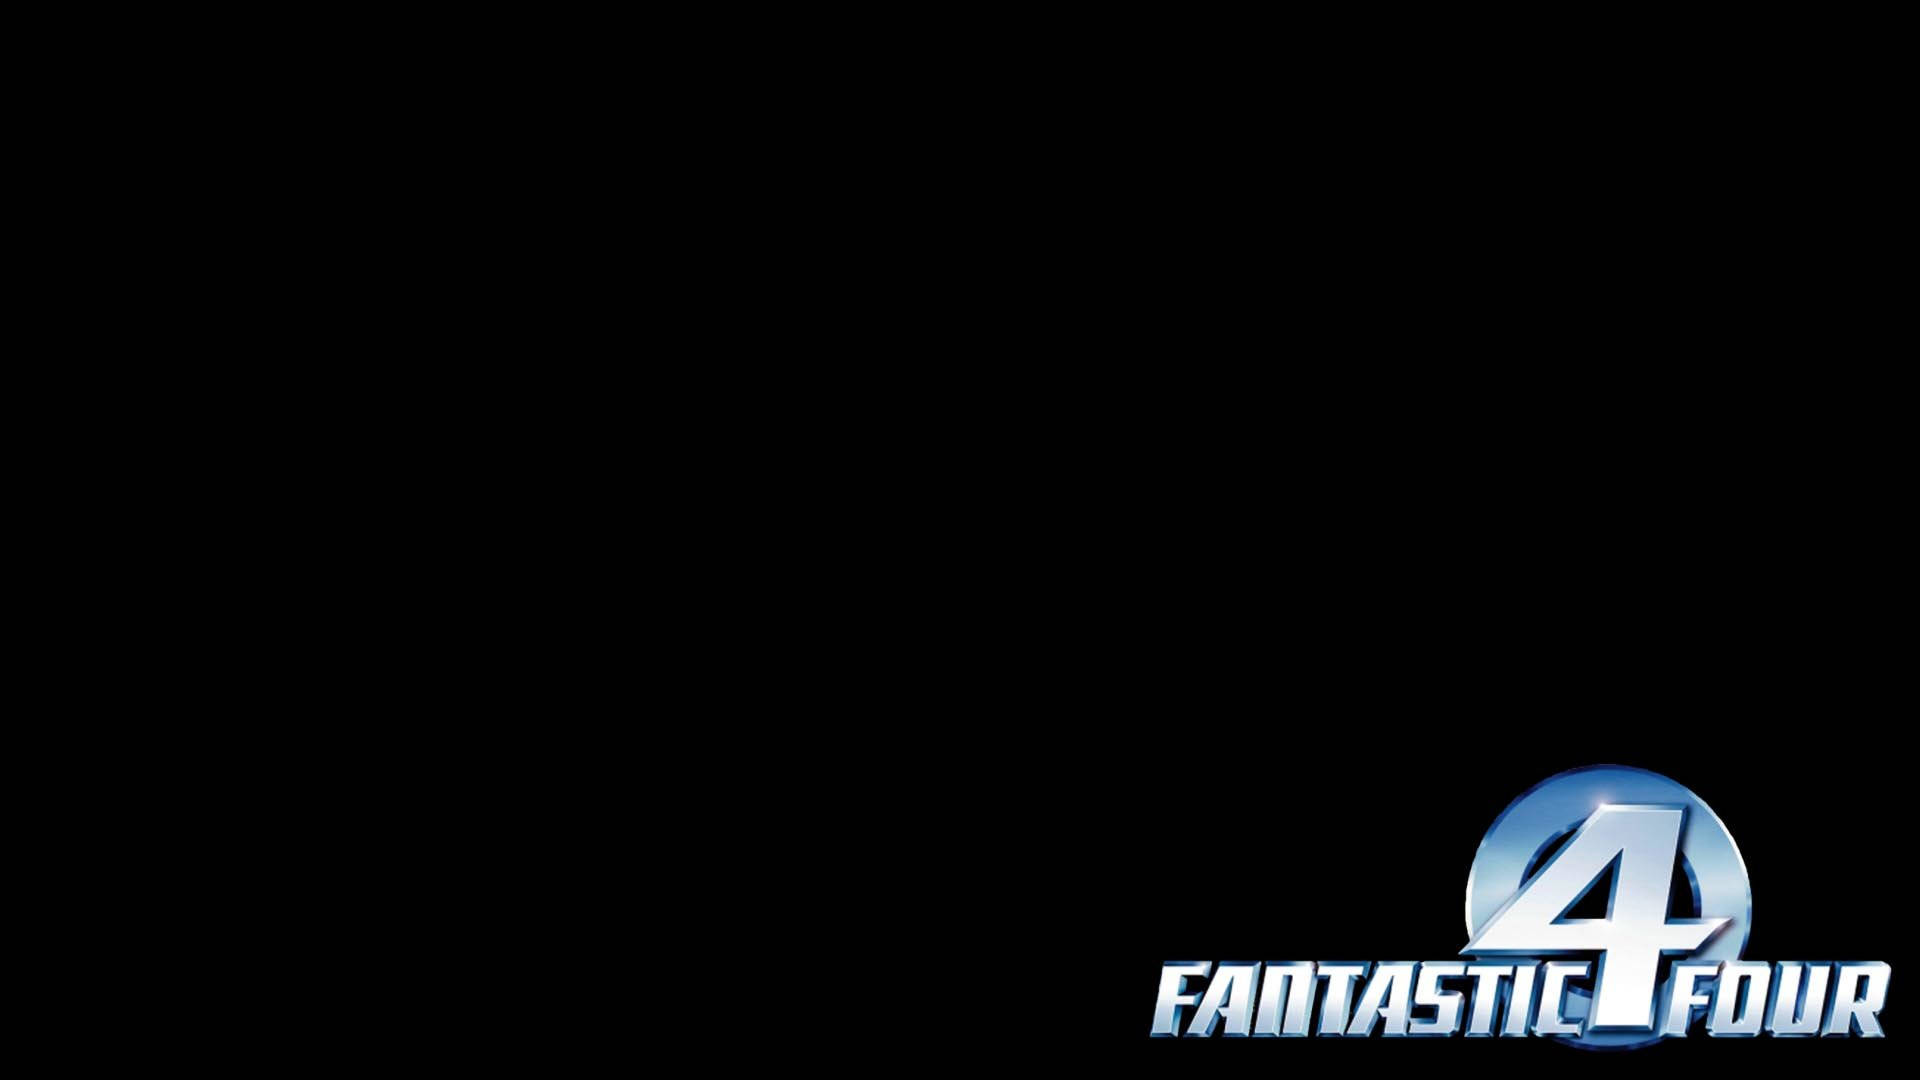 Fantastic Four Minimalist Logo Wallpaper